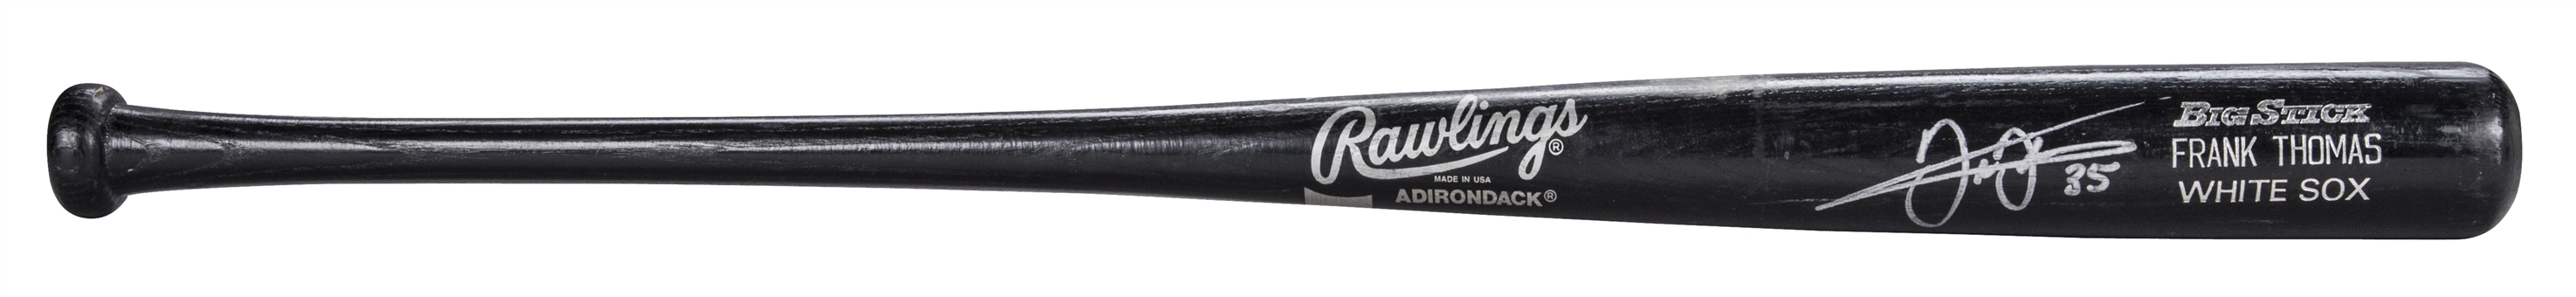 1996 Frank Thomas Game Used and Signed Rawlings Bat (PSA/DNA GU 9)